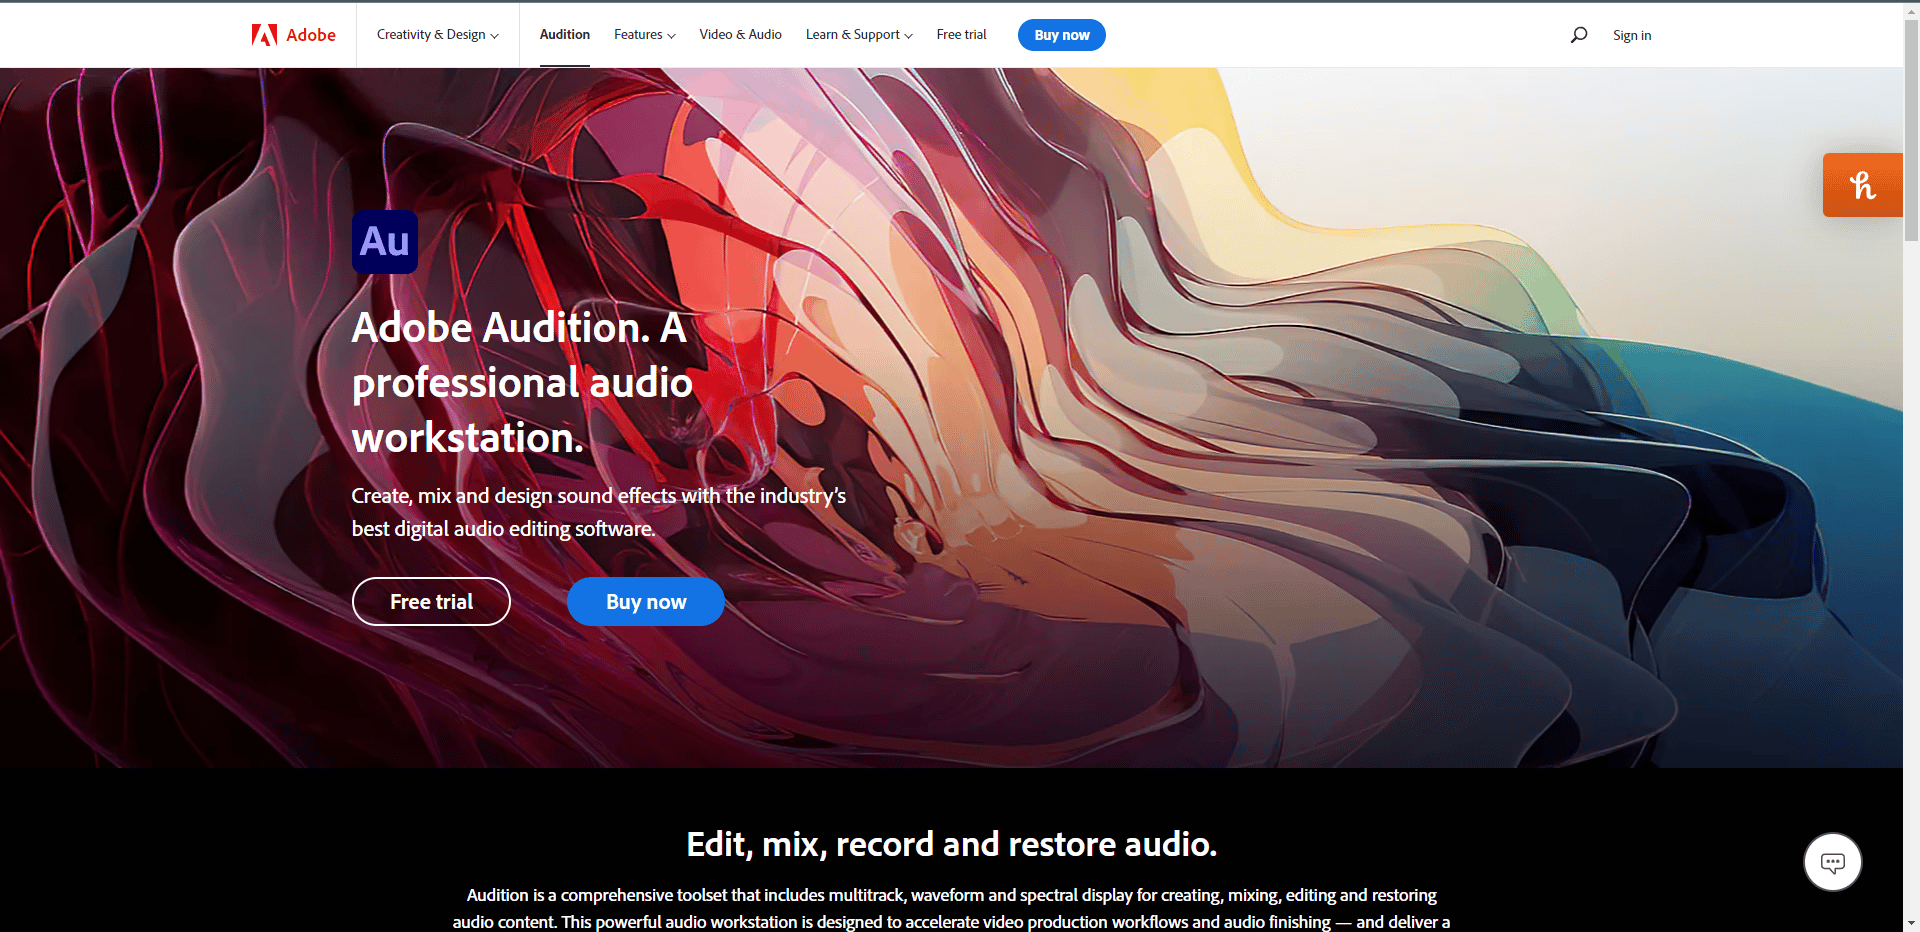 Sitio web oficial de Adobe Audition